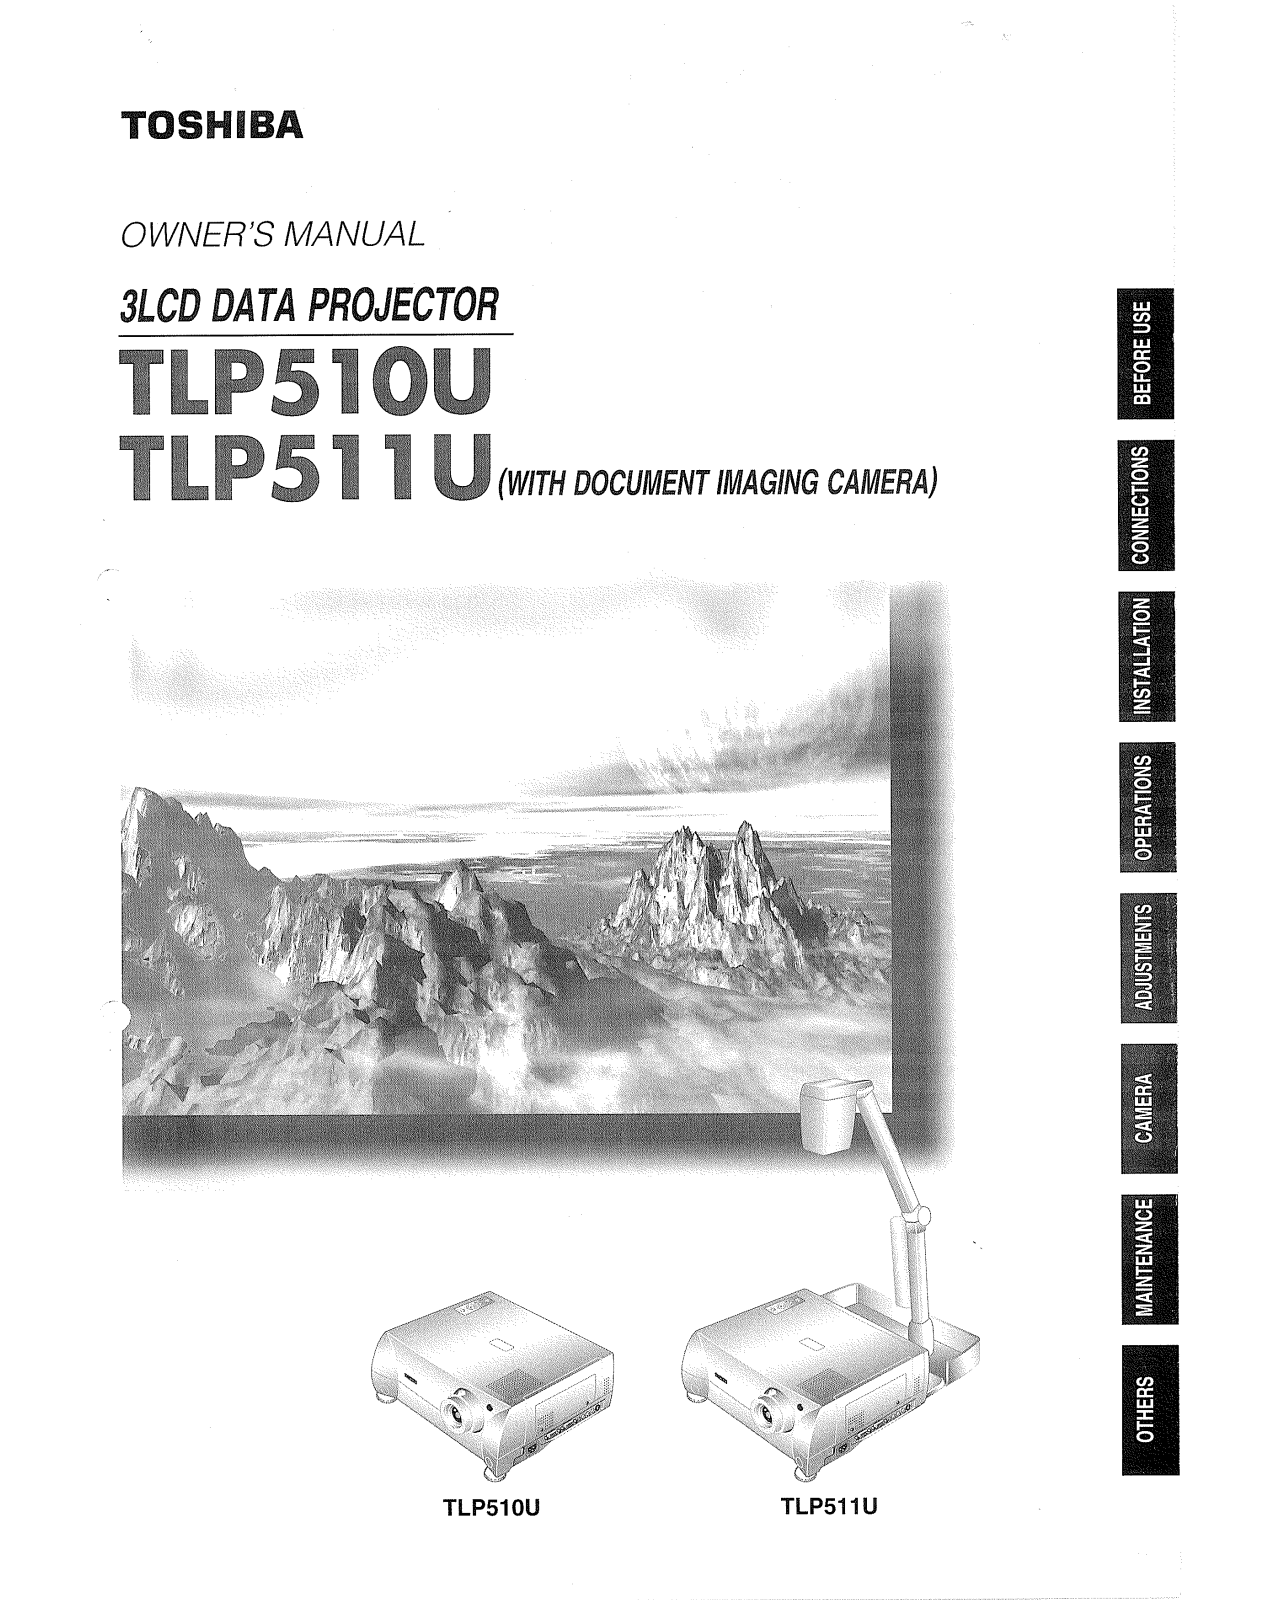 Toshiba TL-511, TL-510 User Manual